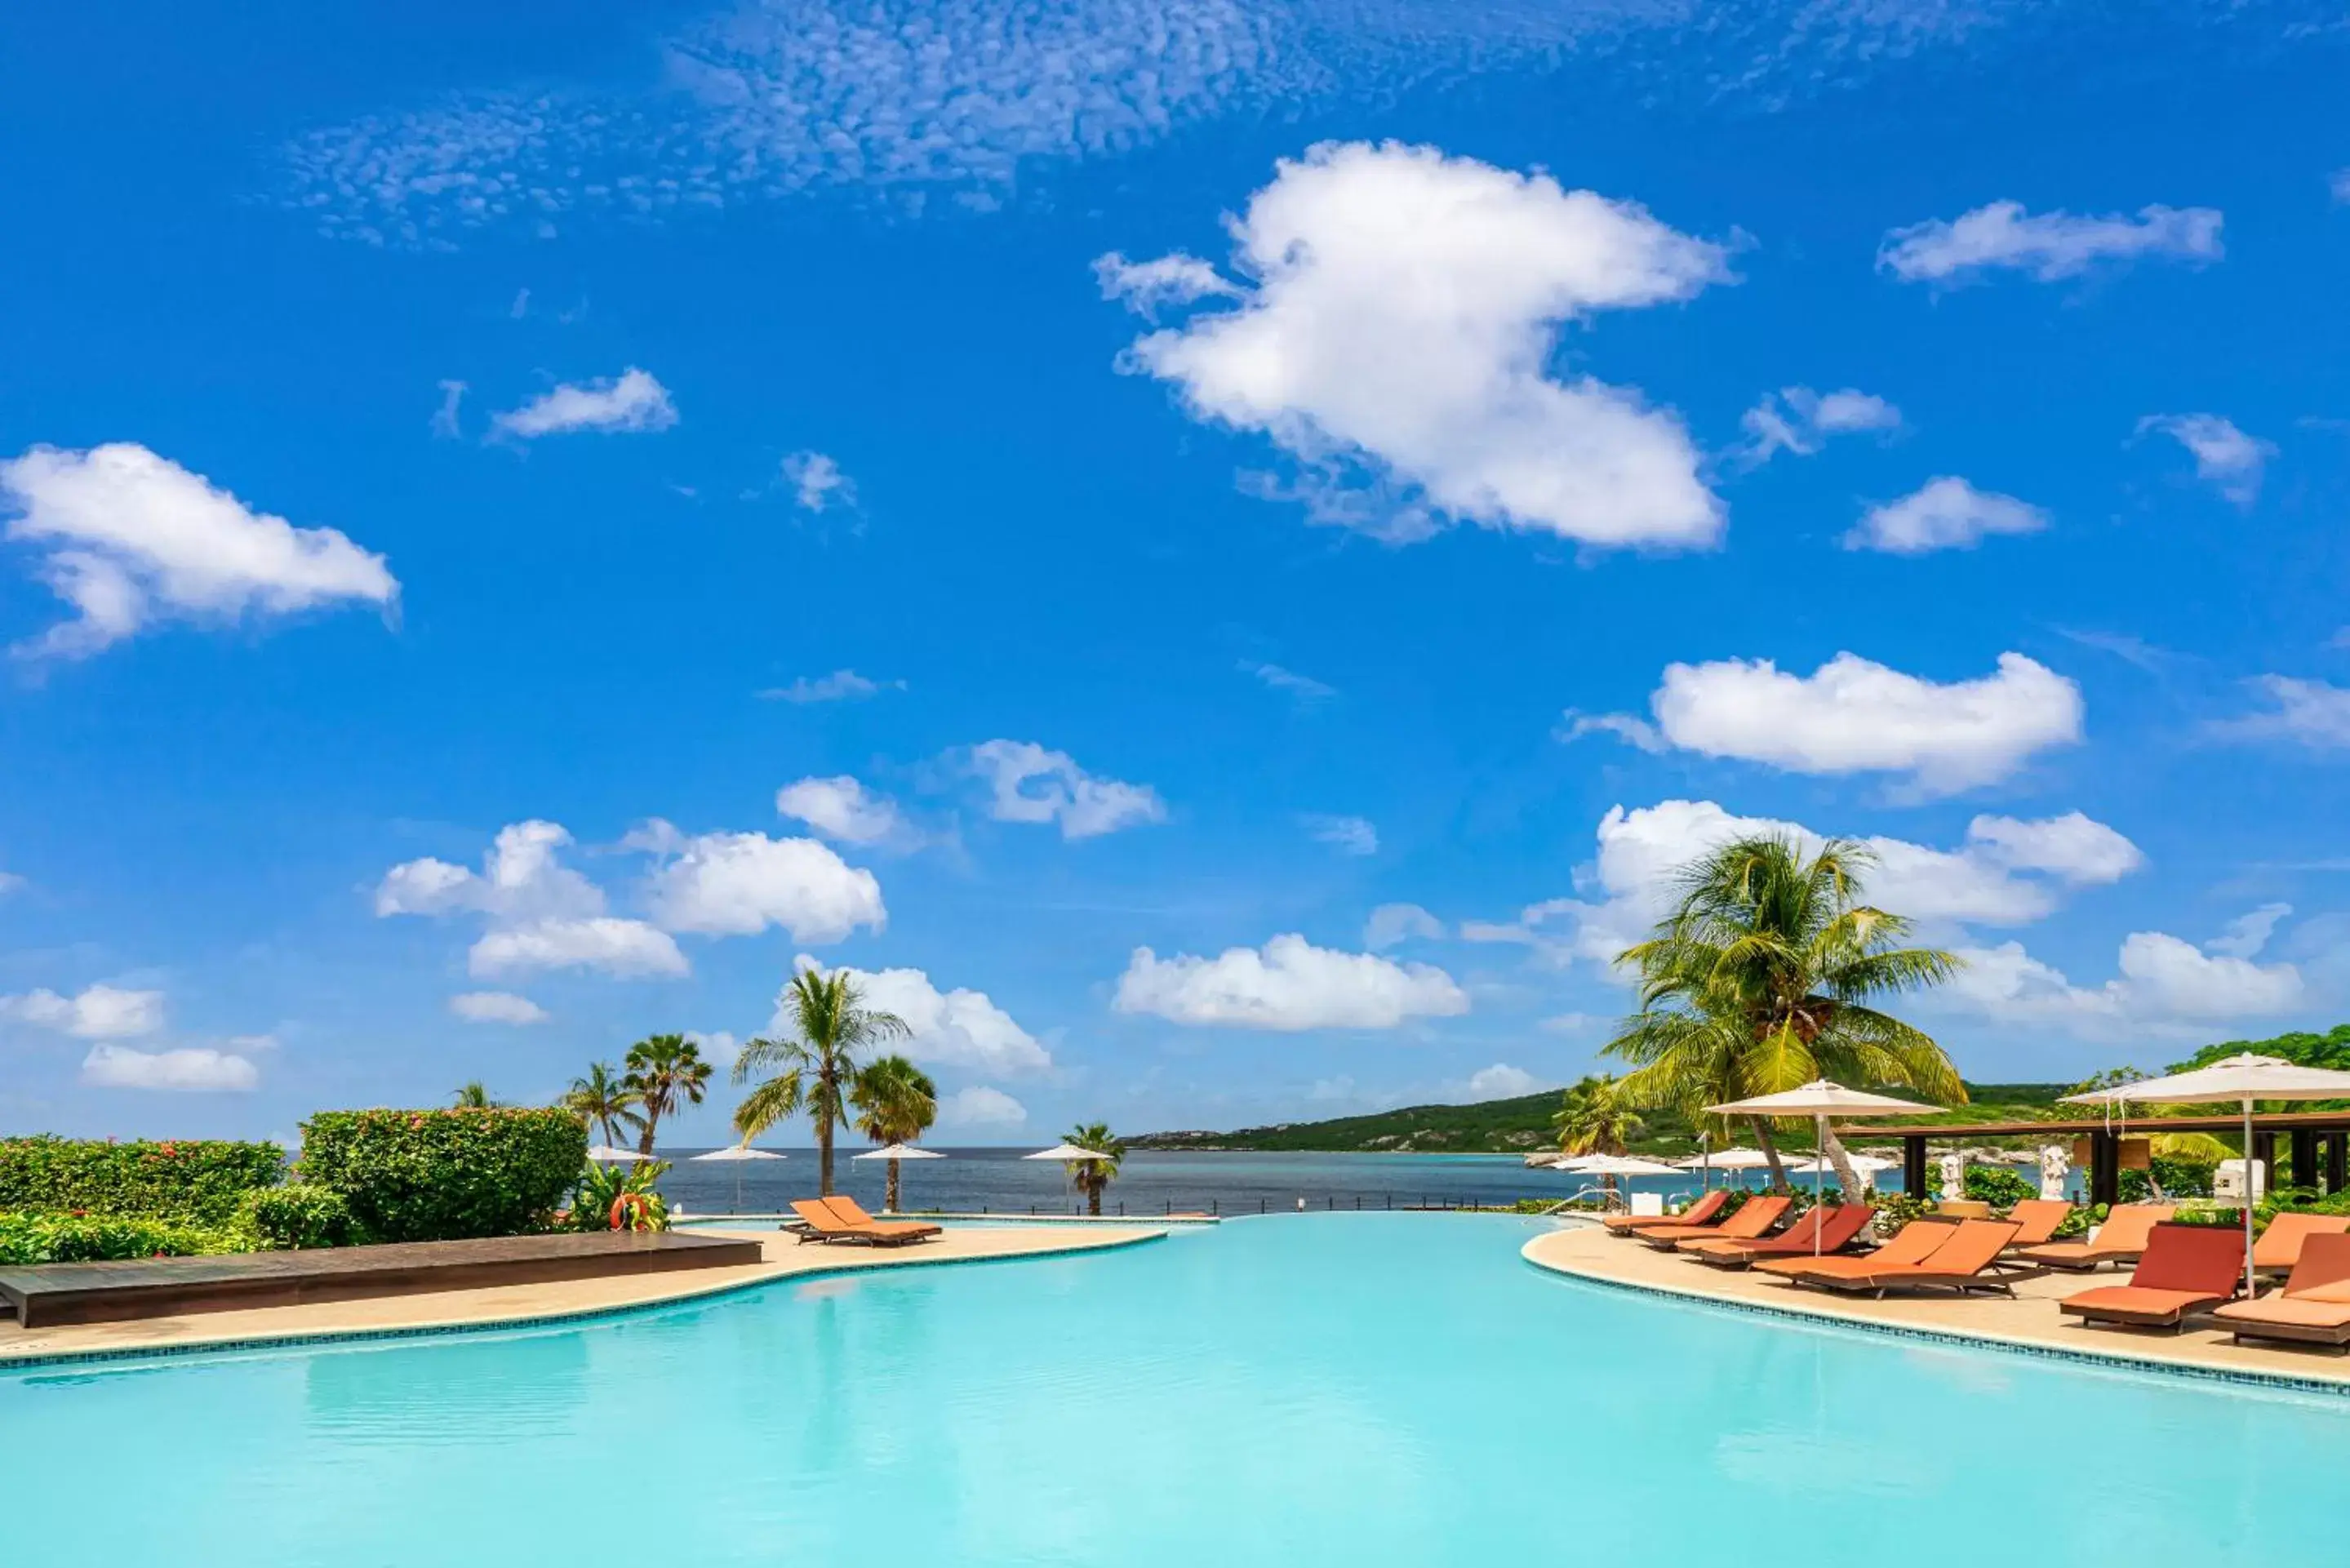 Swimming pool in Dreams Curacao Resort, Spa & Casino